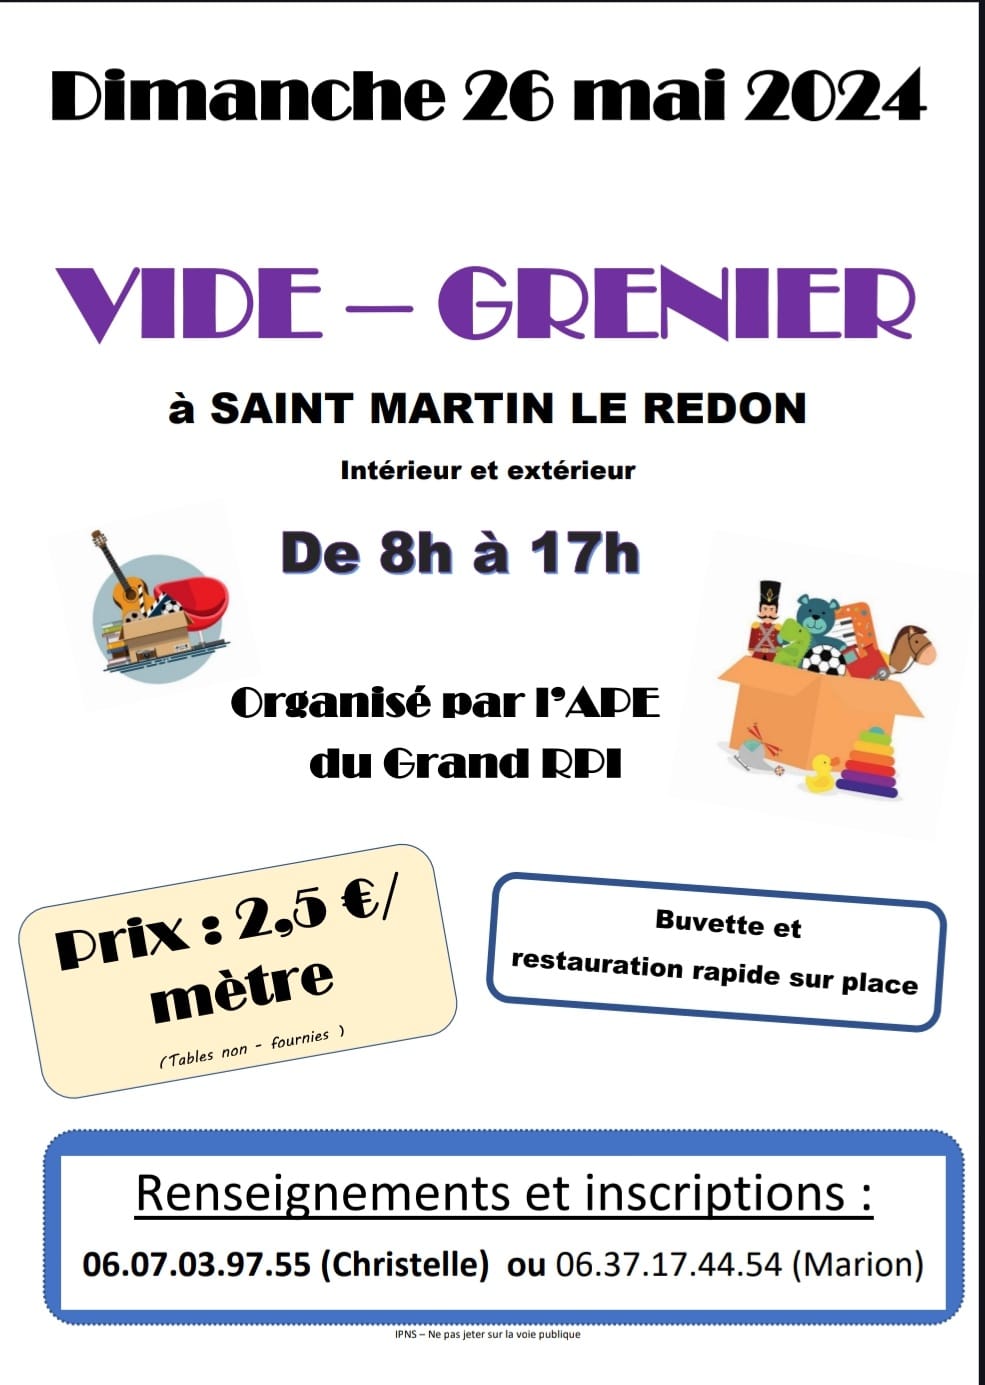 Figeac : Vide-greniers à Saint-Martin-le-Redon